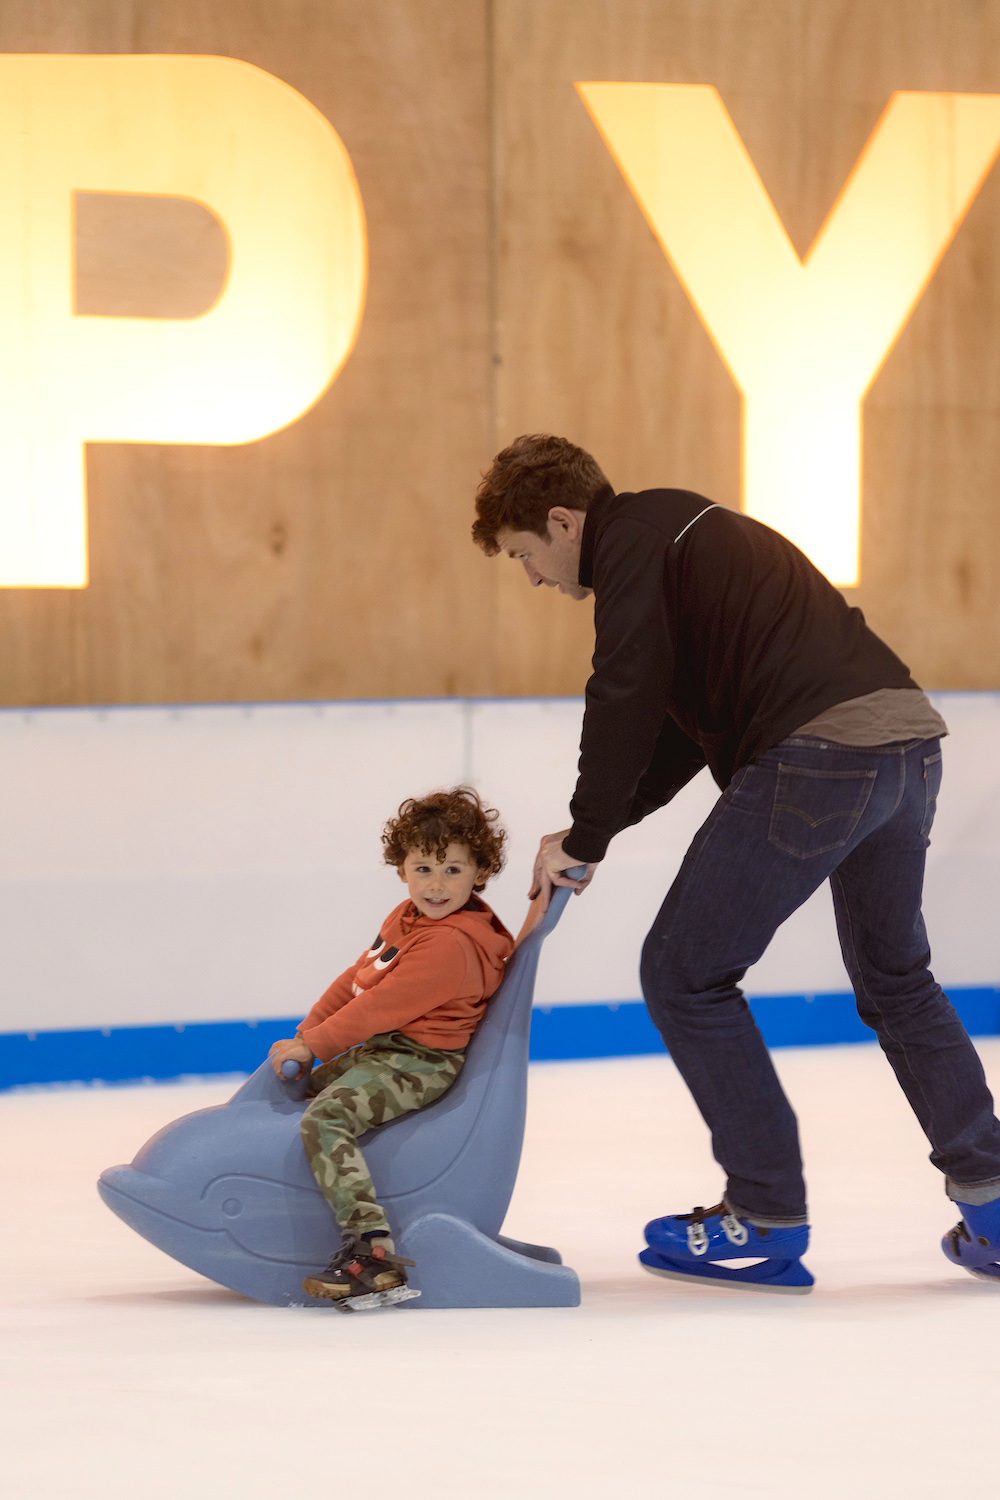 Man ice skating and pushing young child around on a training seal Propyard Winter Wonderland Ice skating in Bristol